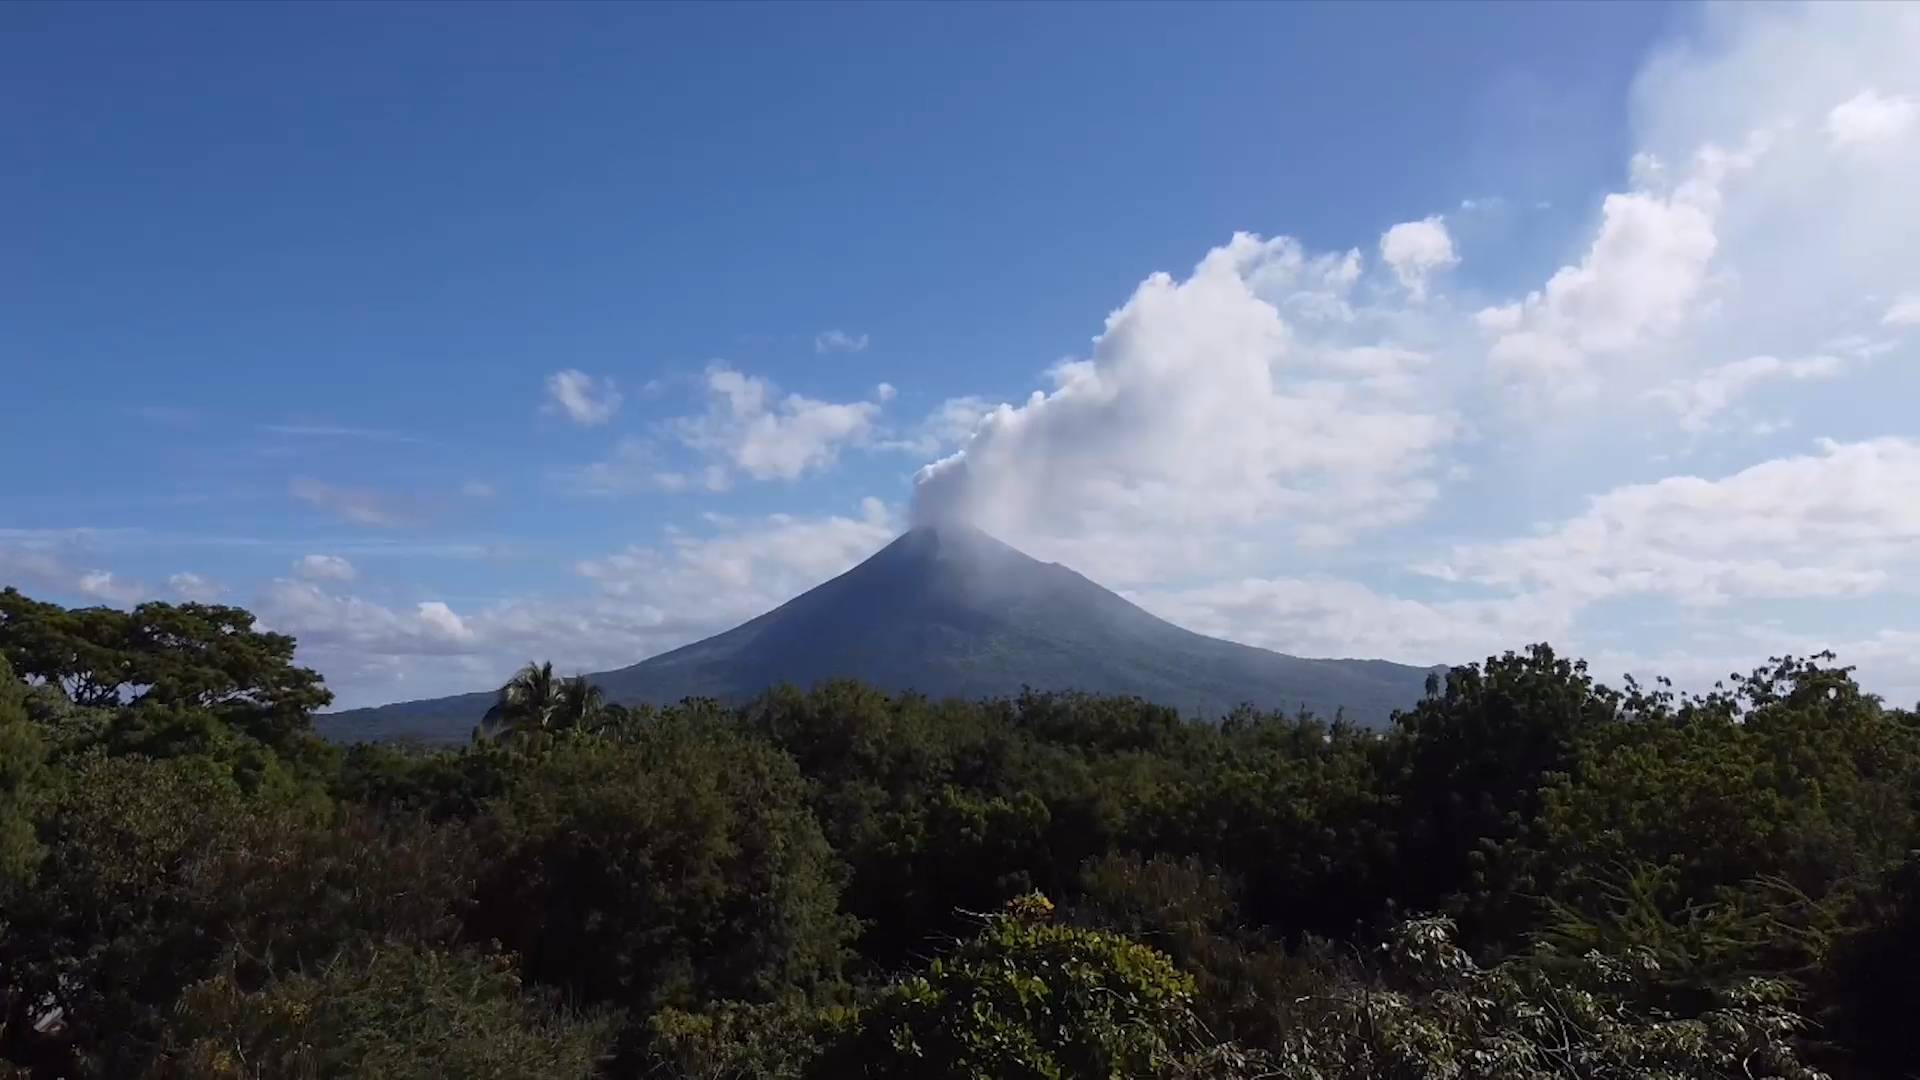 GLOBALink | Exploring Nicaragua, the land of volcanoes